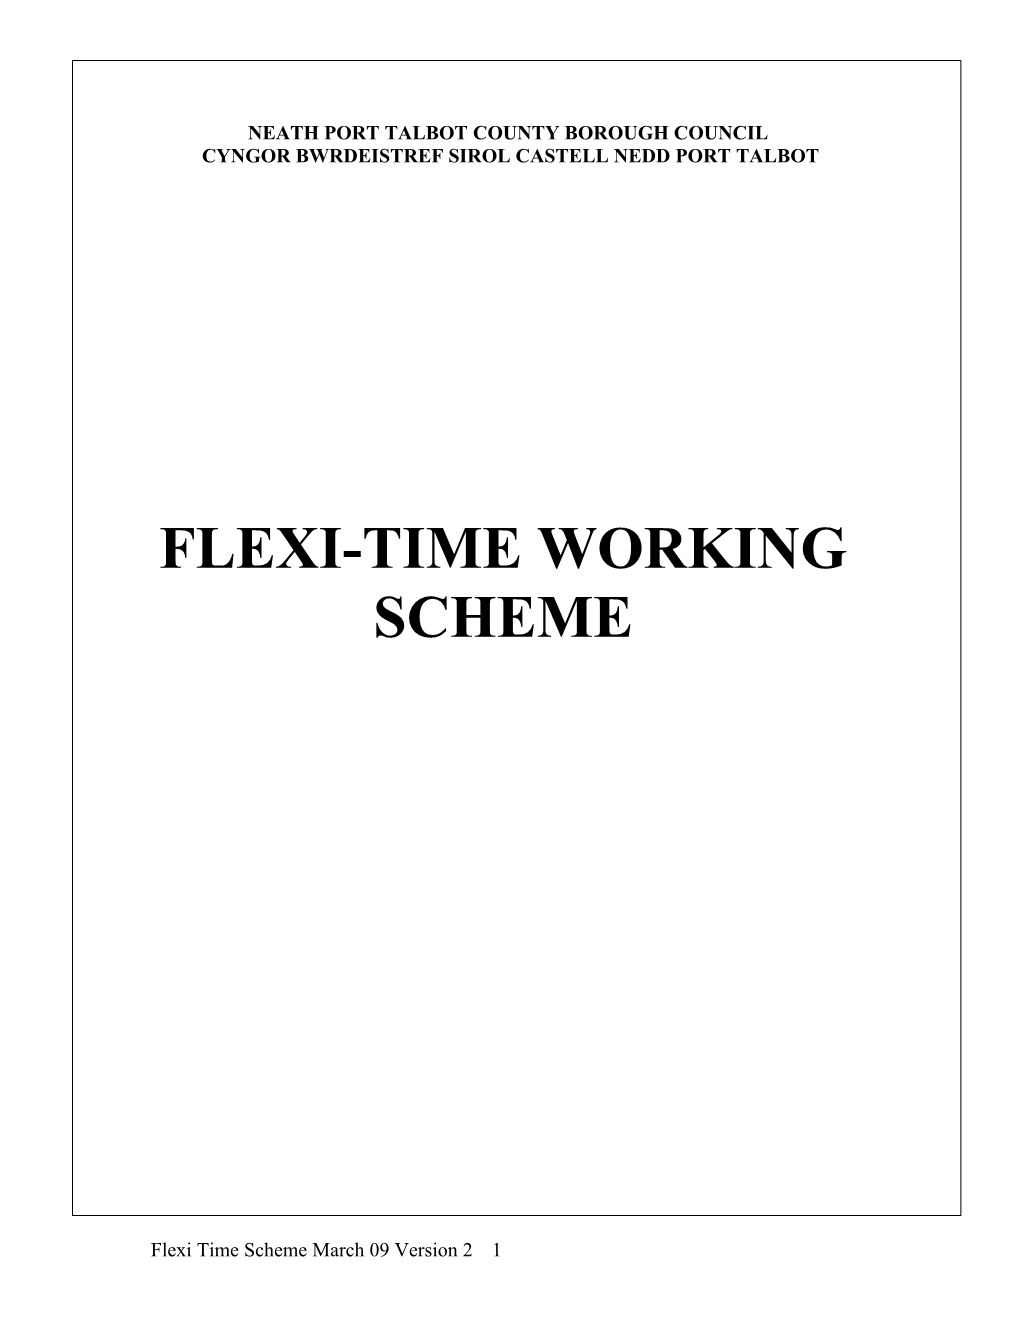 Flexi-Time Working Scheme